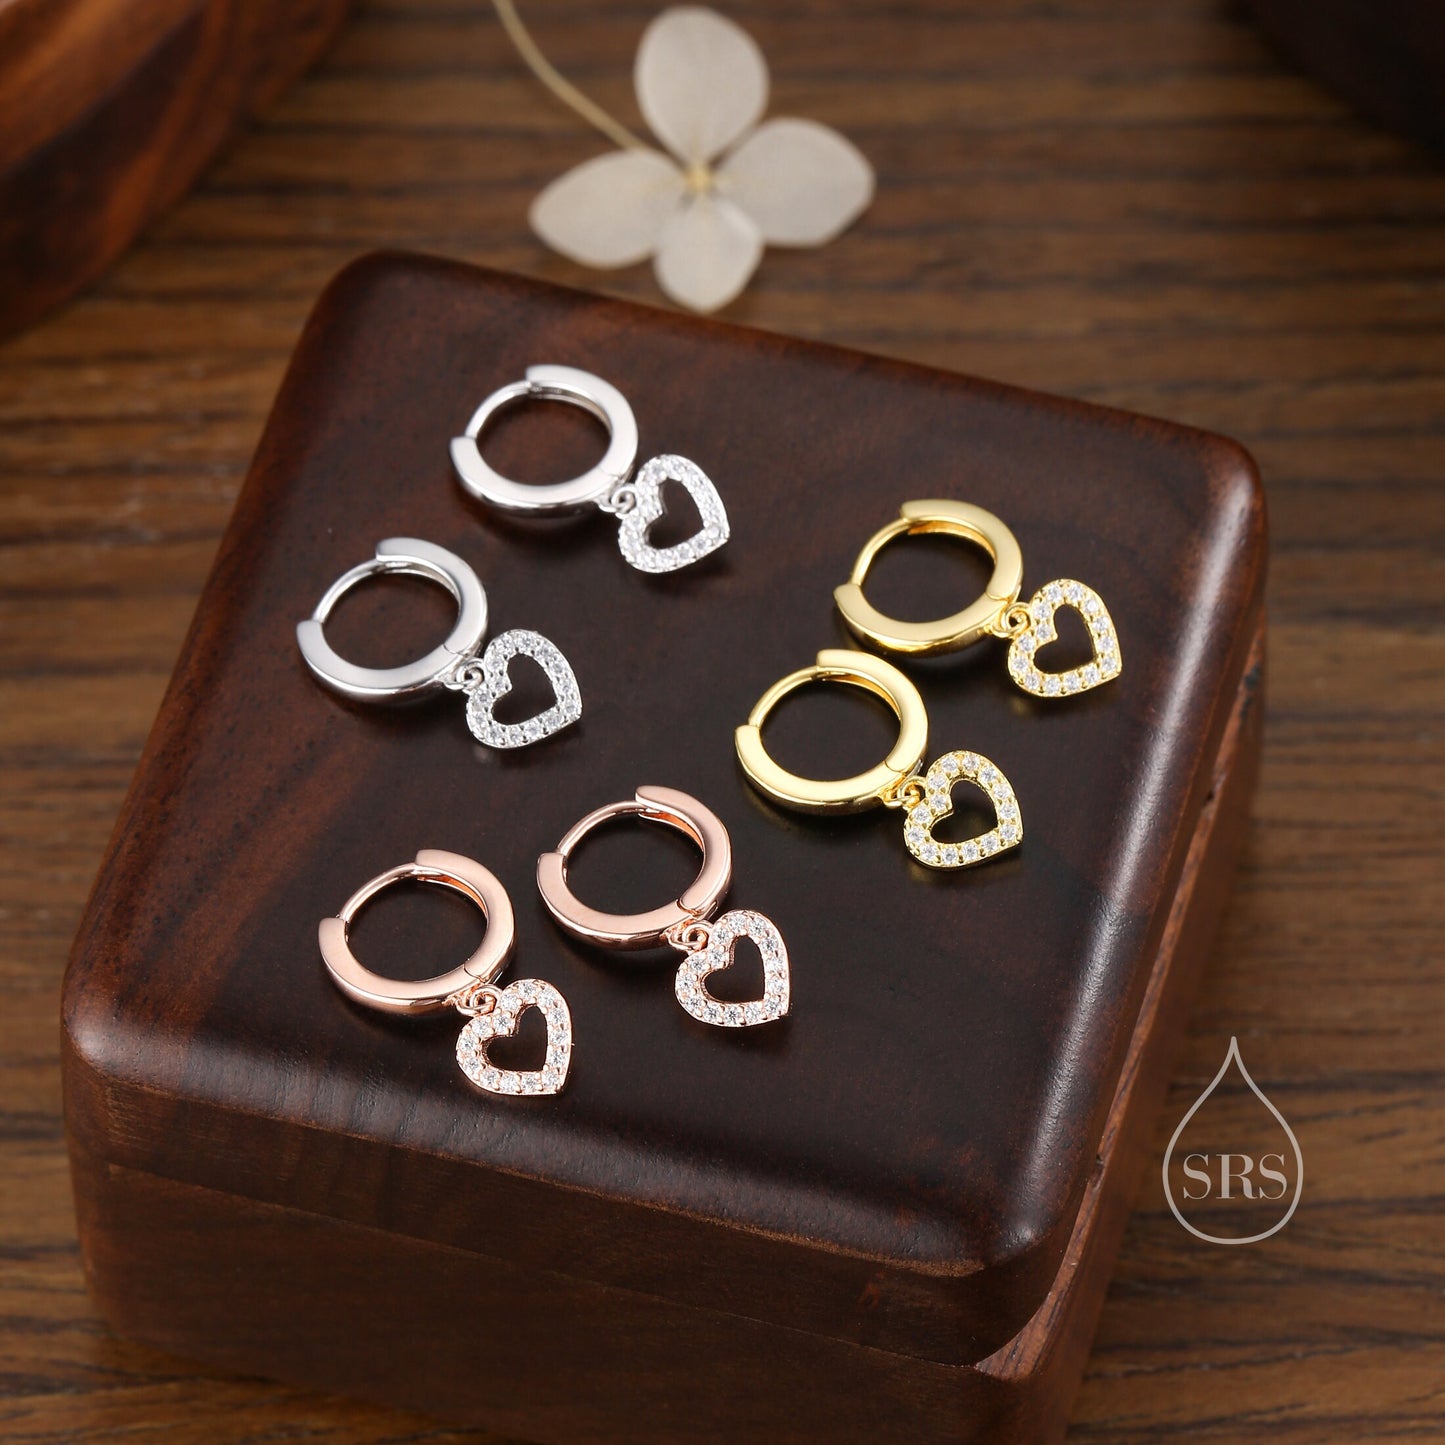 Tiny CZ Heart Dangle Huggie Hoop in Sterling Silver, Silver or Gold or Rose Gold, Skinny CZ Heart Earrings, Heart Huggie Hoops